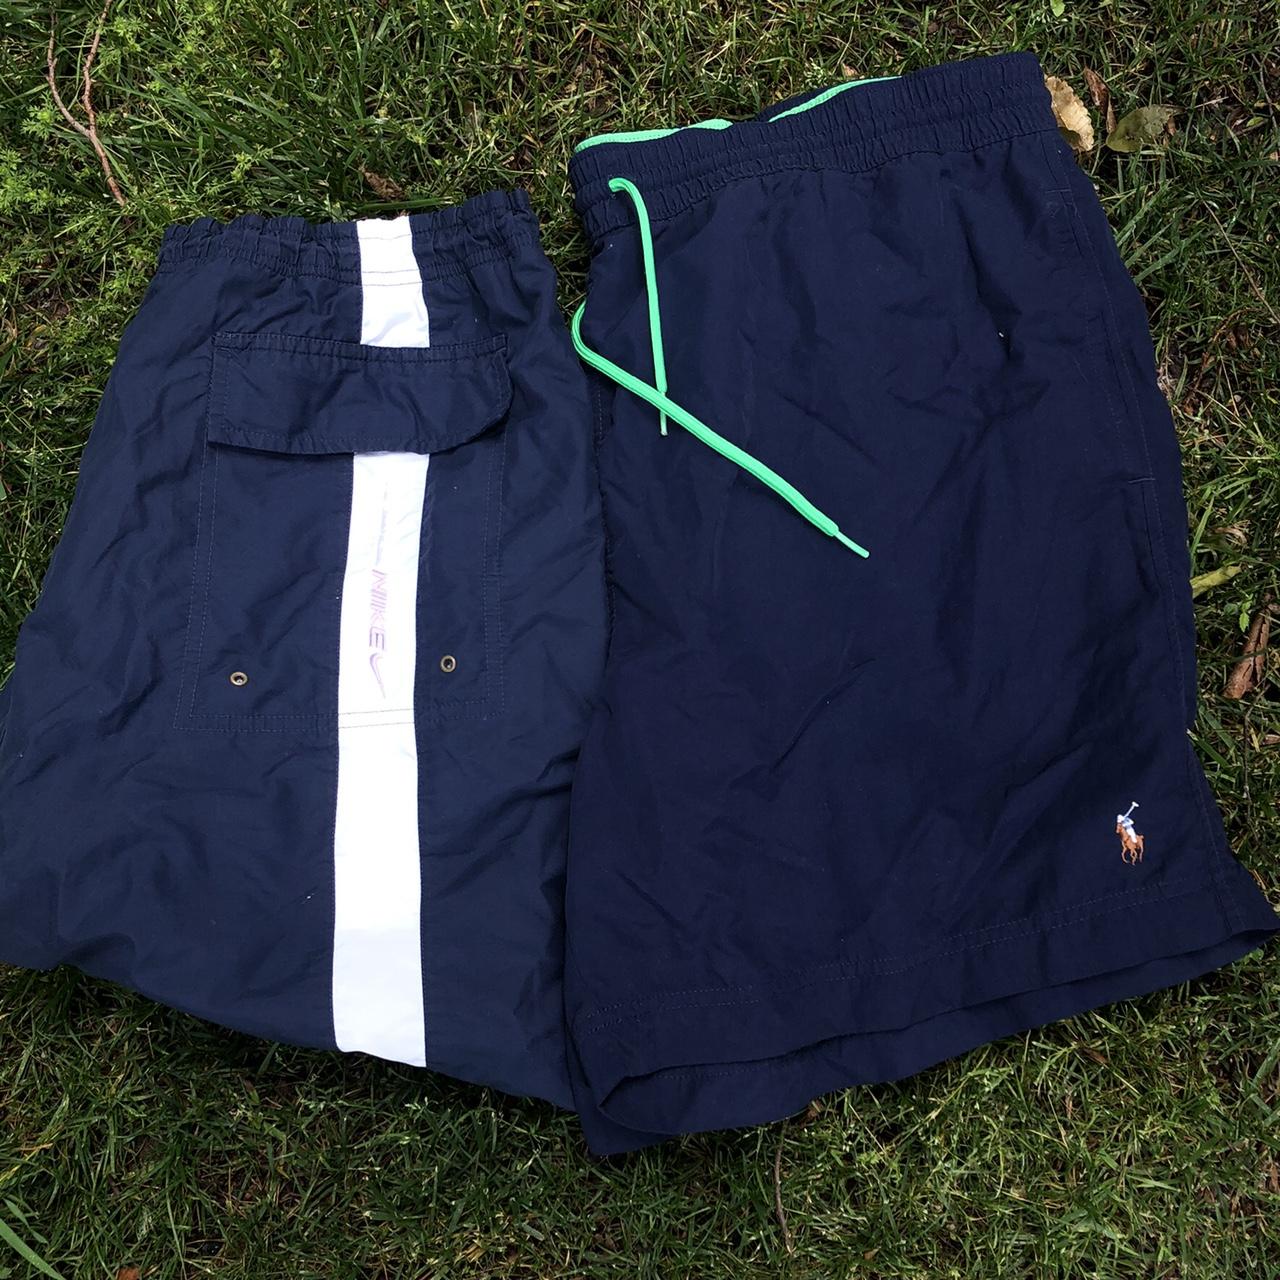 Nike Men's Navy and Blue Swim-briefs-shorts (3)